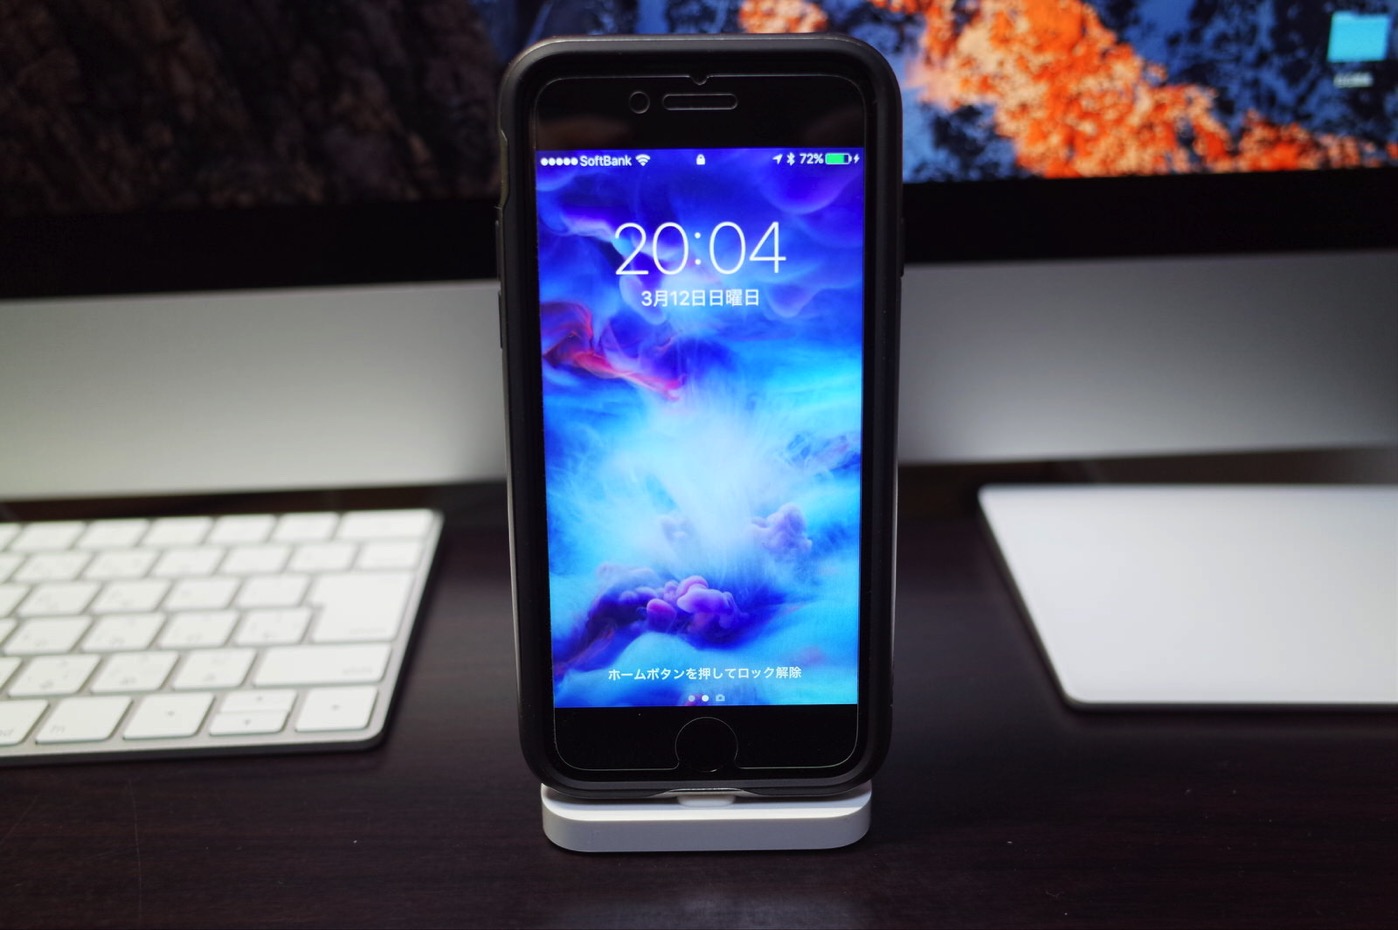 【Spigen】 iPhone7 ケース, ネオ・ハイブリッド [ 米軍MIL規格取得 二重構造 バンパー ] アイフォン 7 用 カバー (iPhone7, ガンメタル)-5